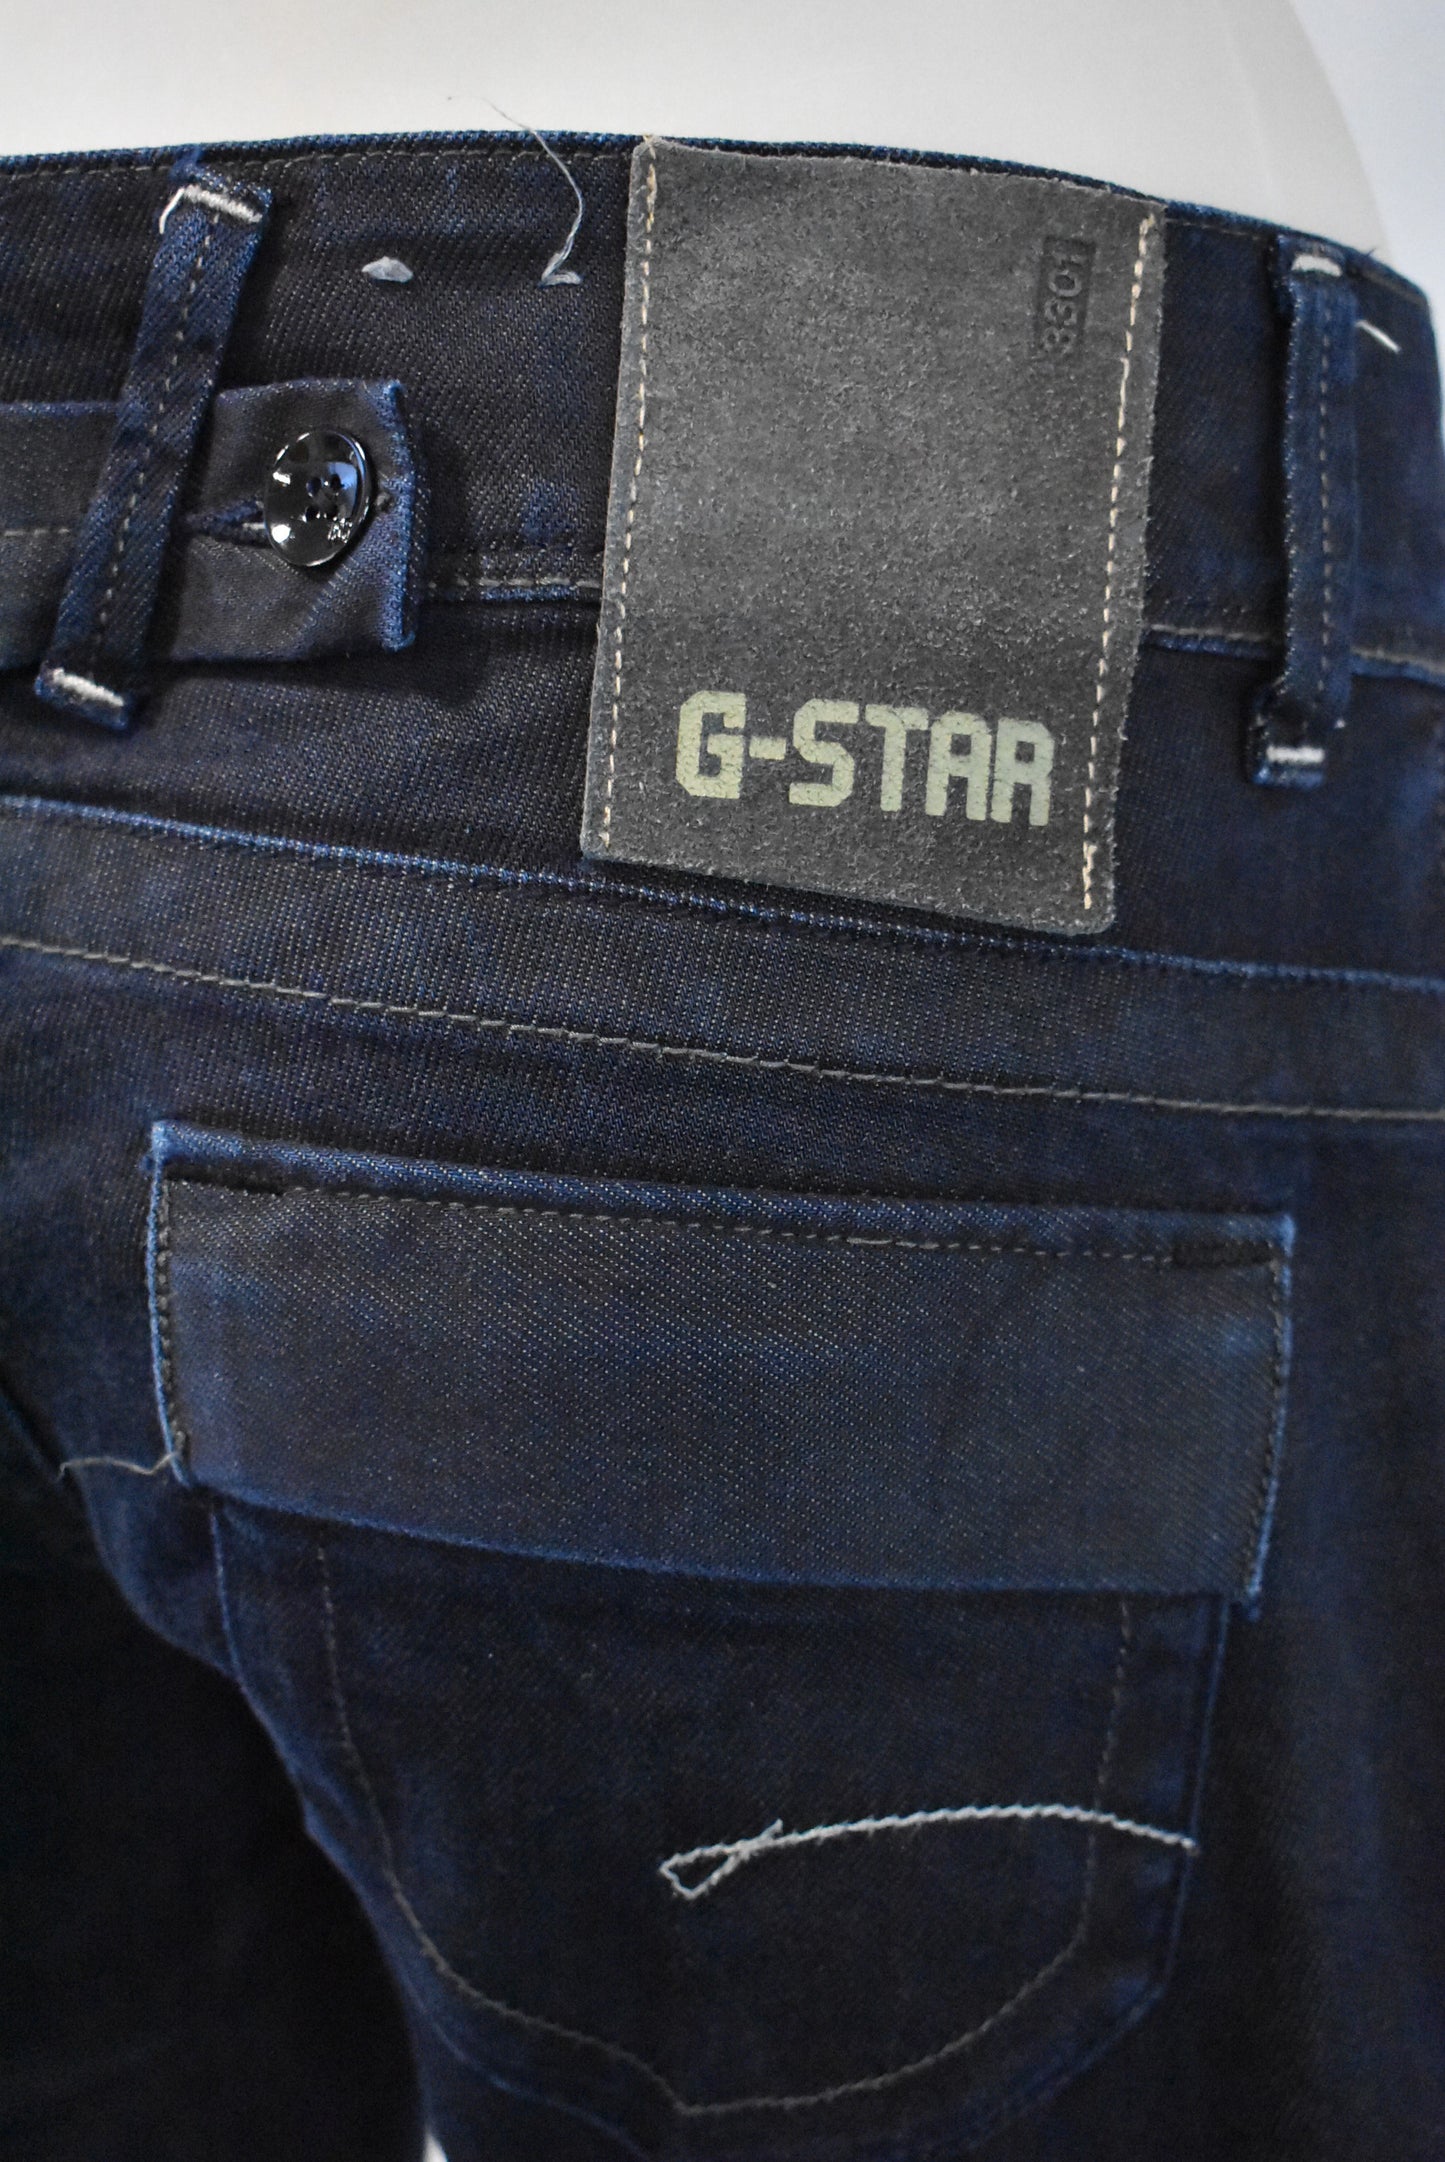 G-star raw denim jeans, 27/32